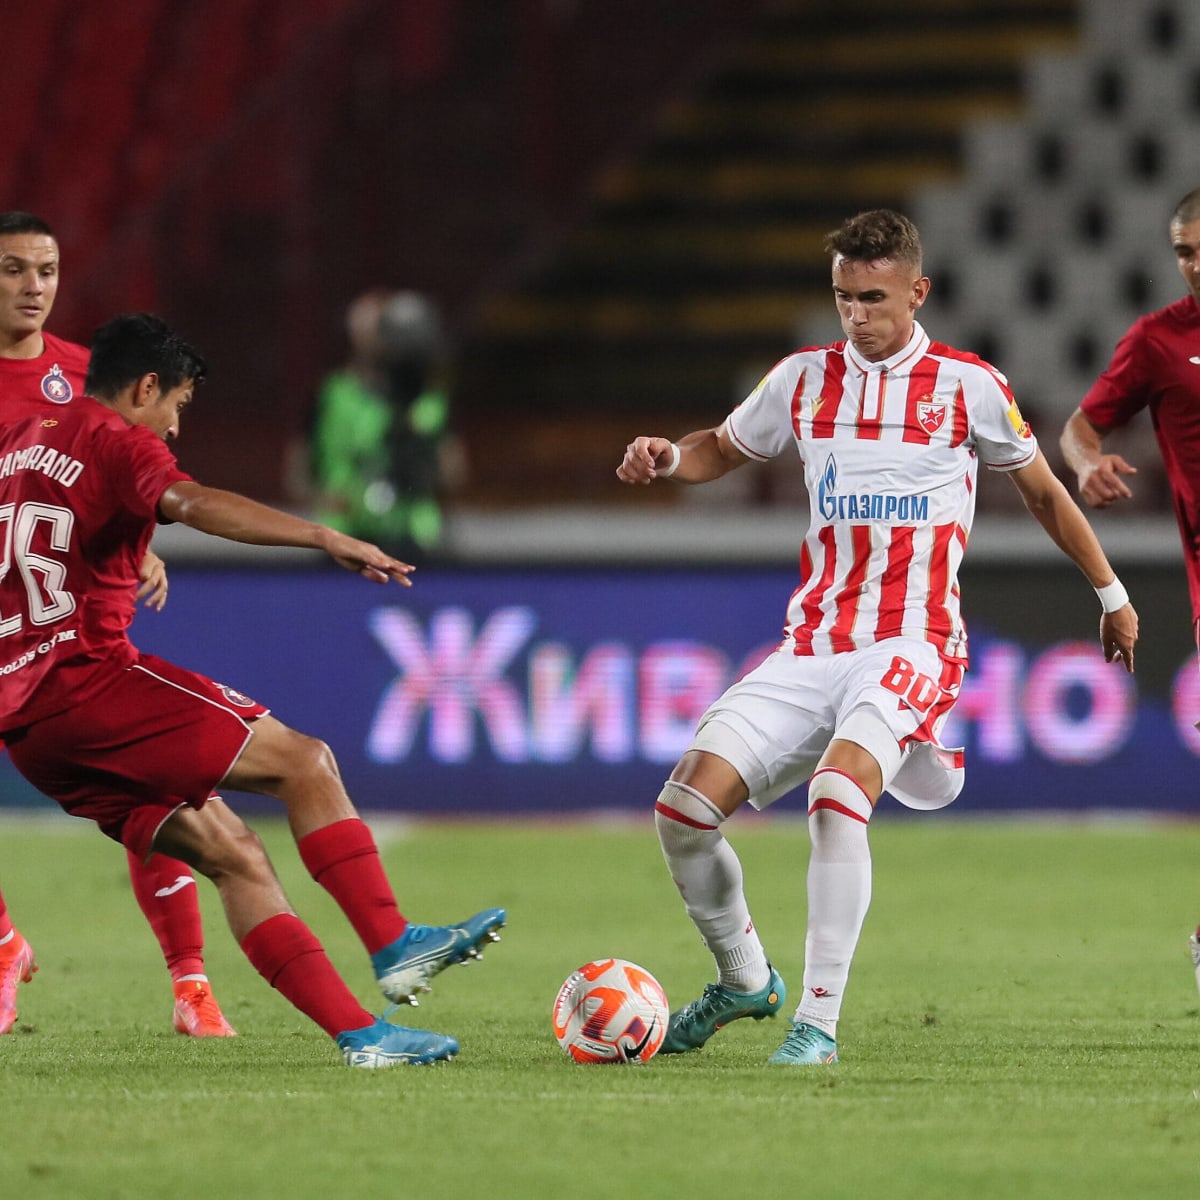 Goals and Highlights: Crvena Zvezda 5-0 Pyunik in Qualifiers UEFA Champions  League 2022